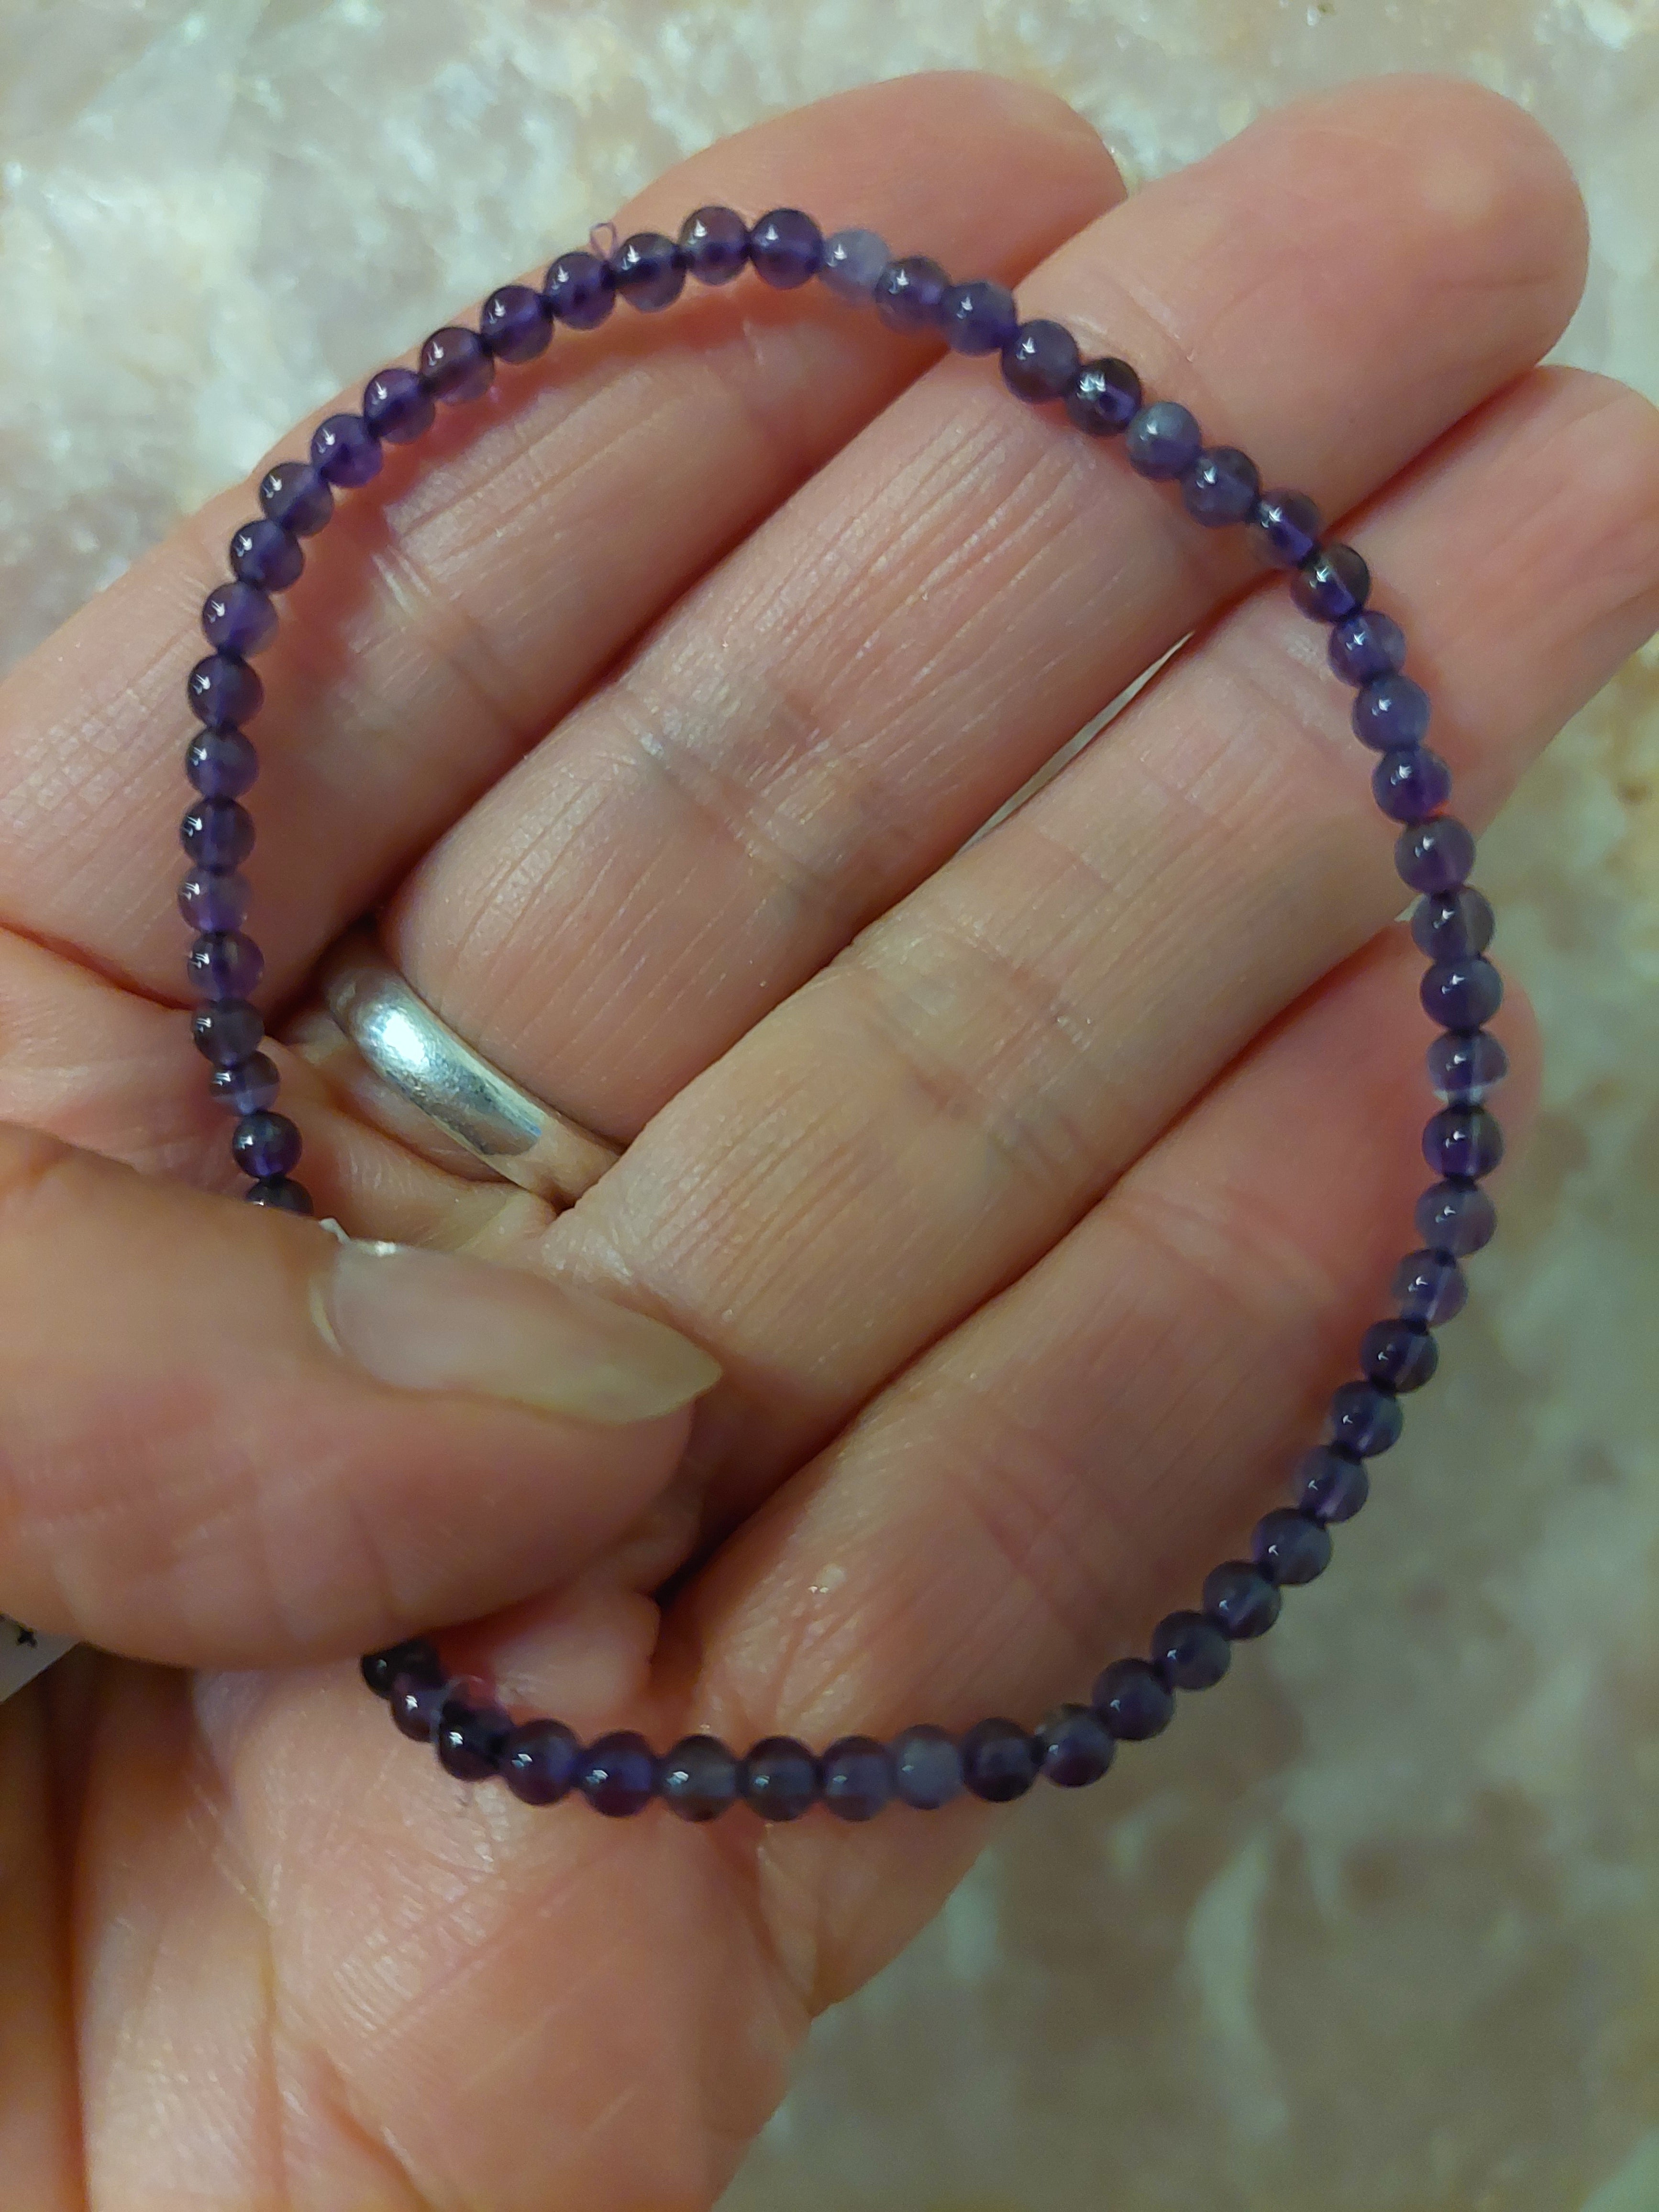 Amethyst Round Bead Bracelet - 3mm Bead